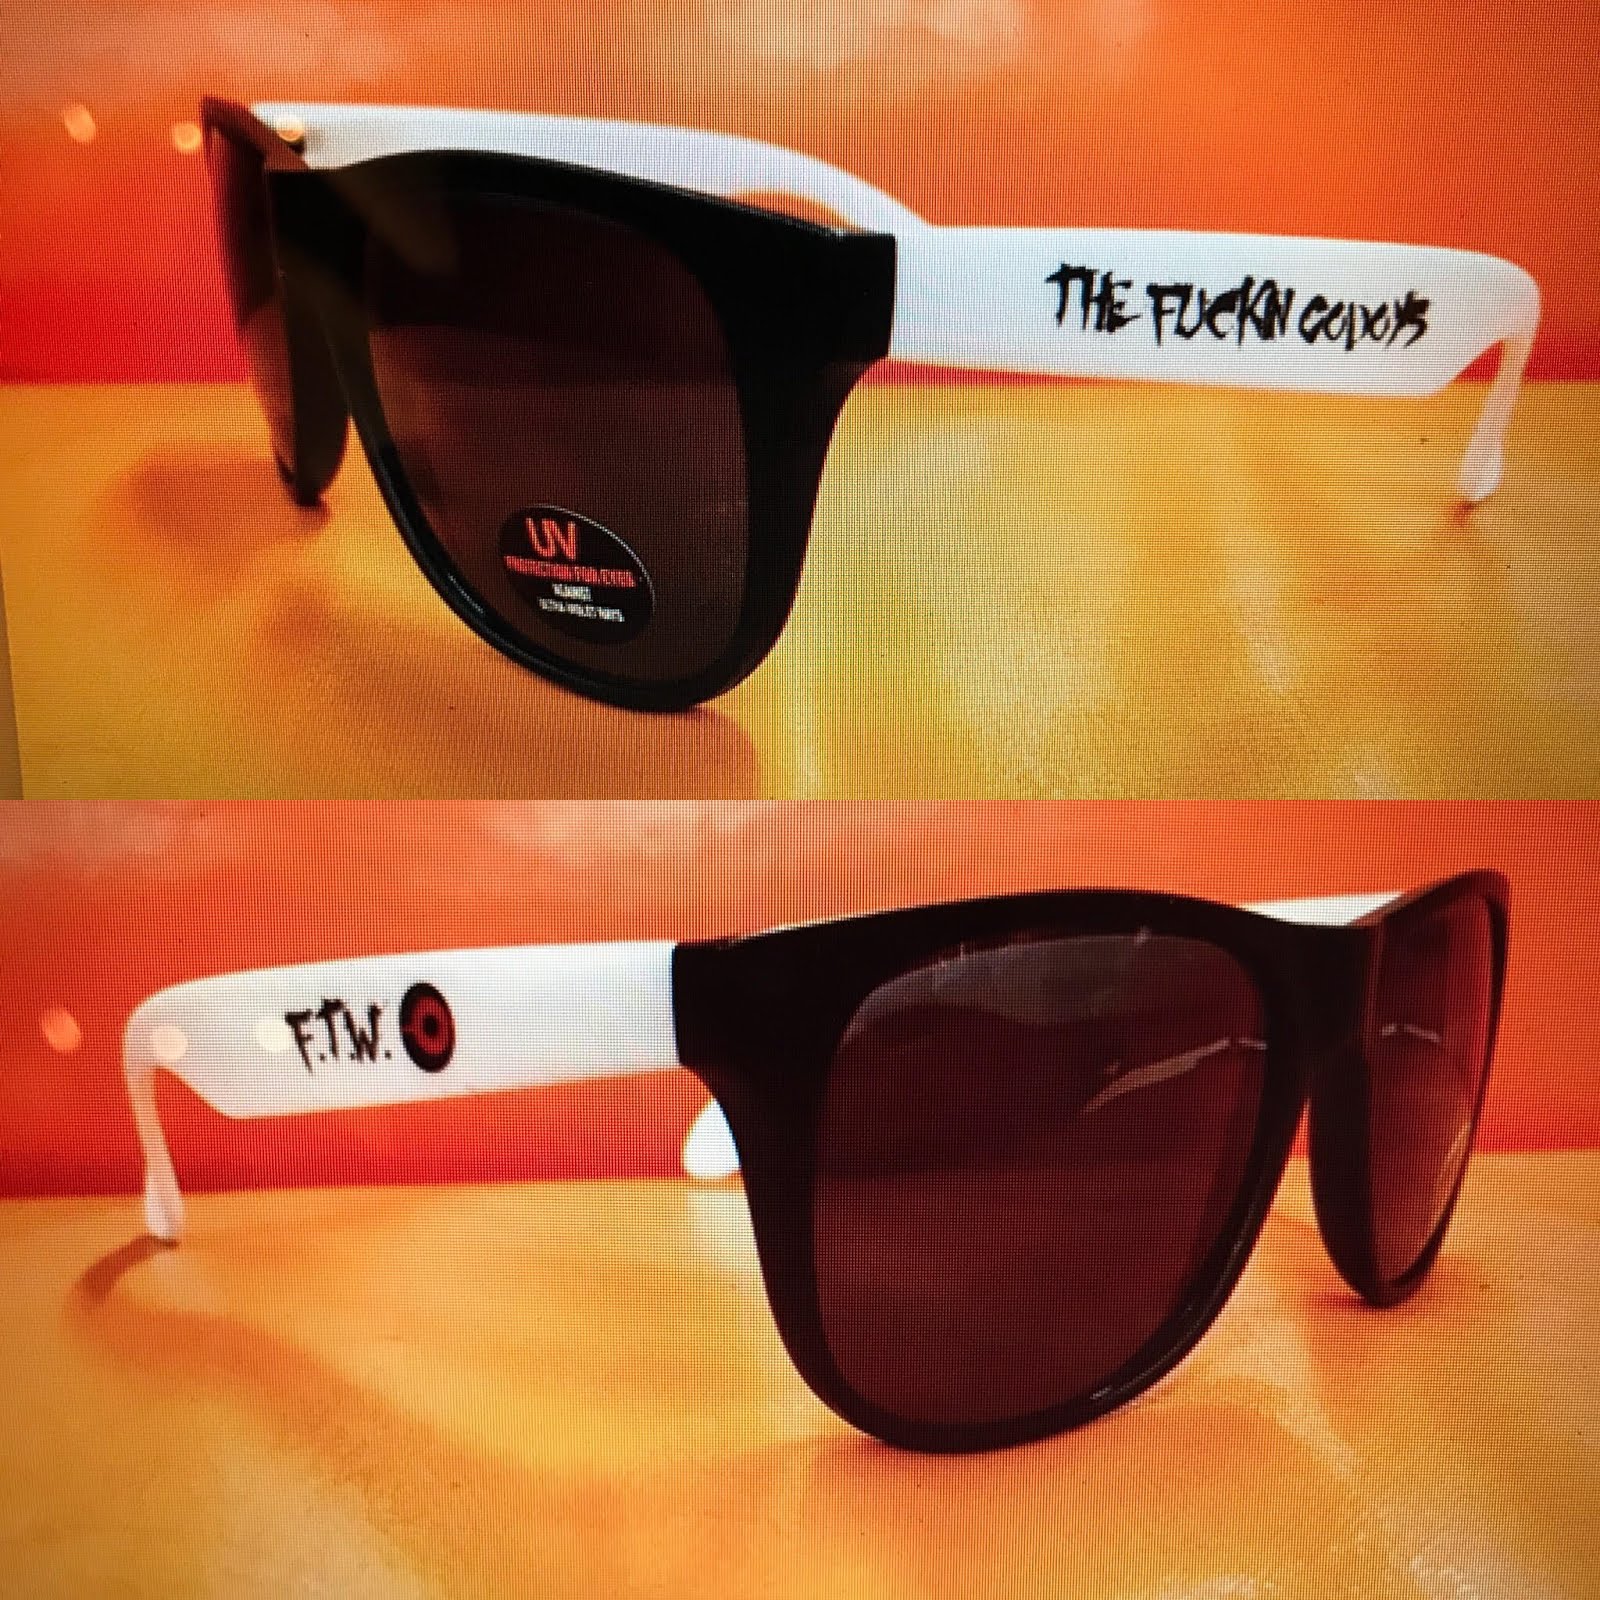 The Fuckin Godoys - FTW sunglasses.